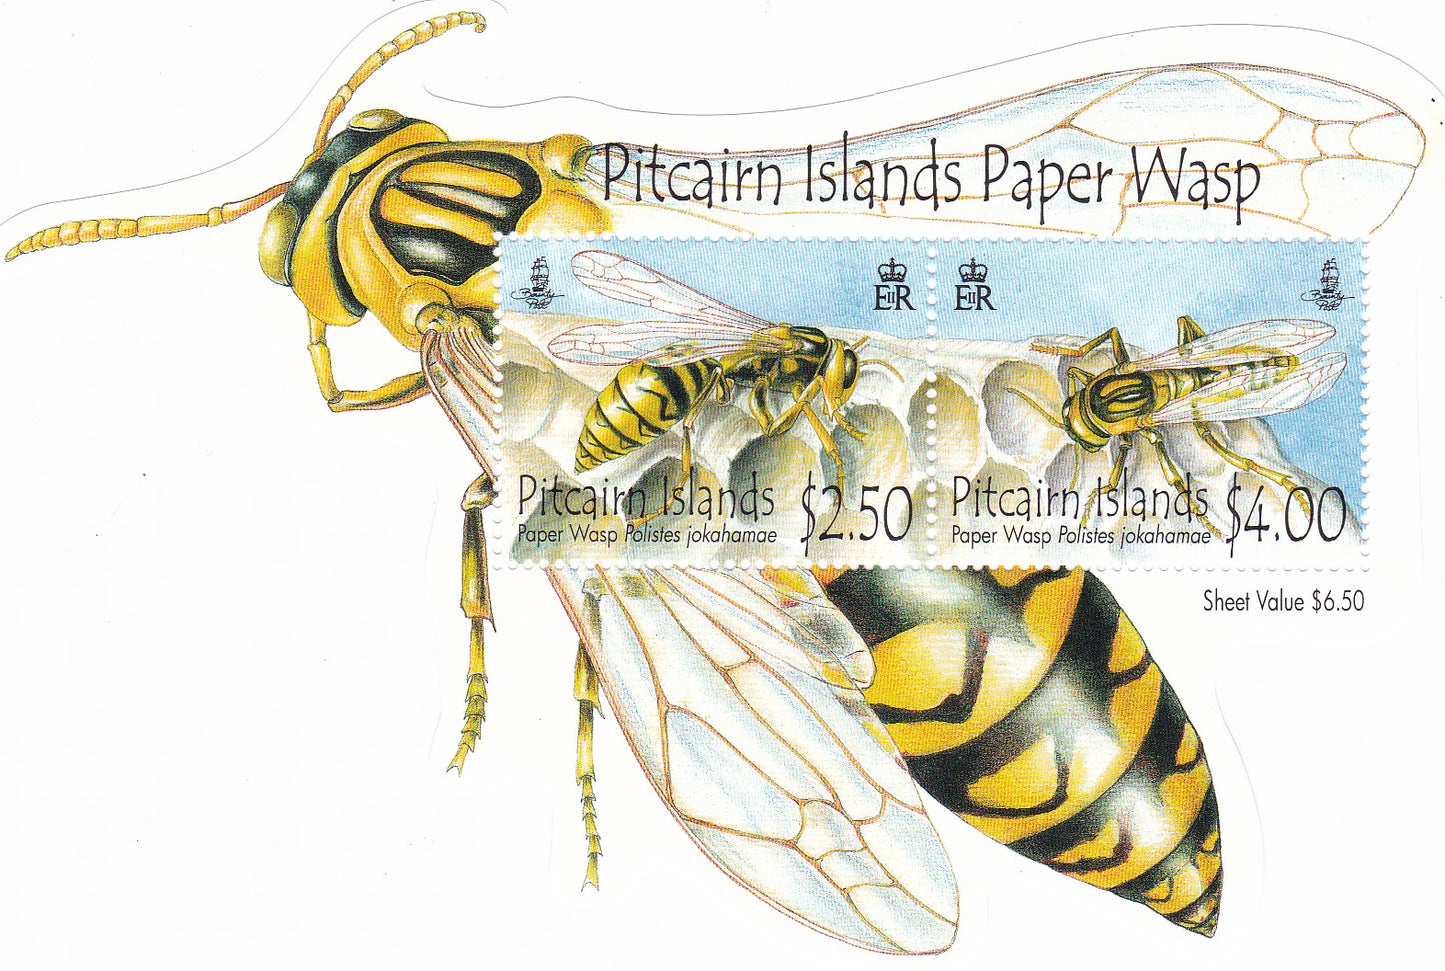 Pitcarin Islands odd shaped miniature sheet on Paper Wasp